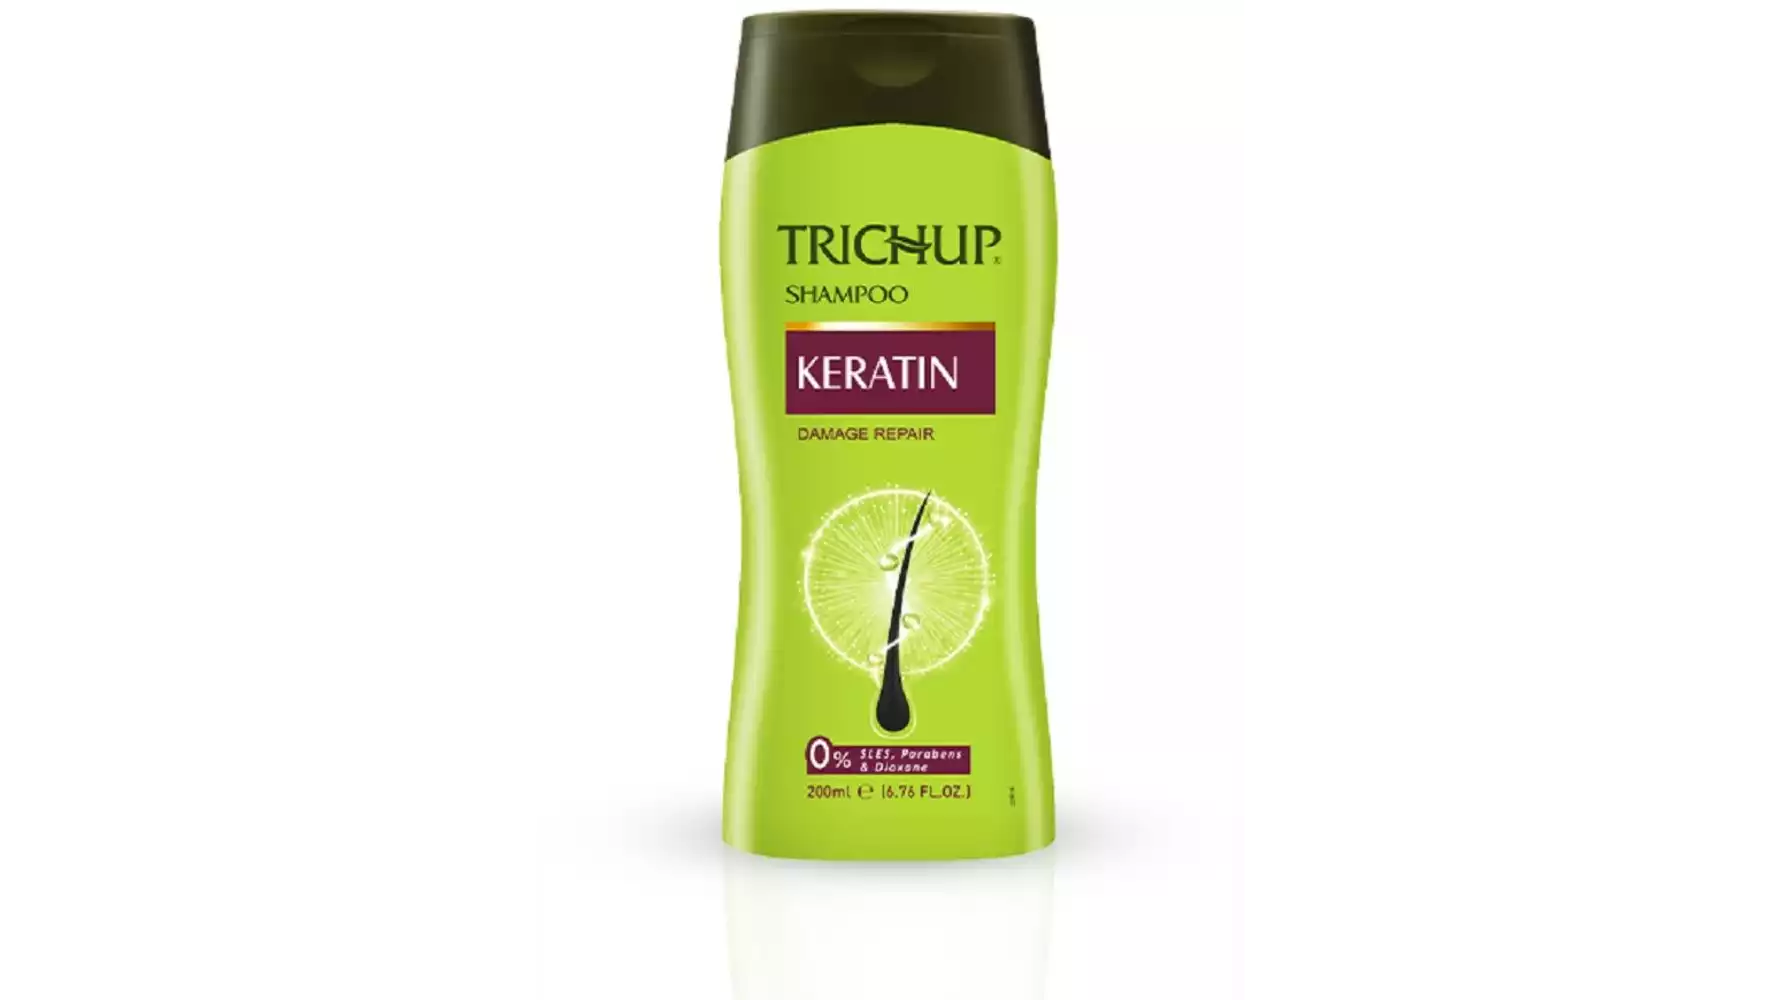 Trichup Keratin Shampoo (400ml)